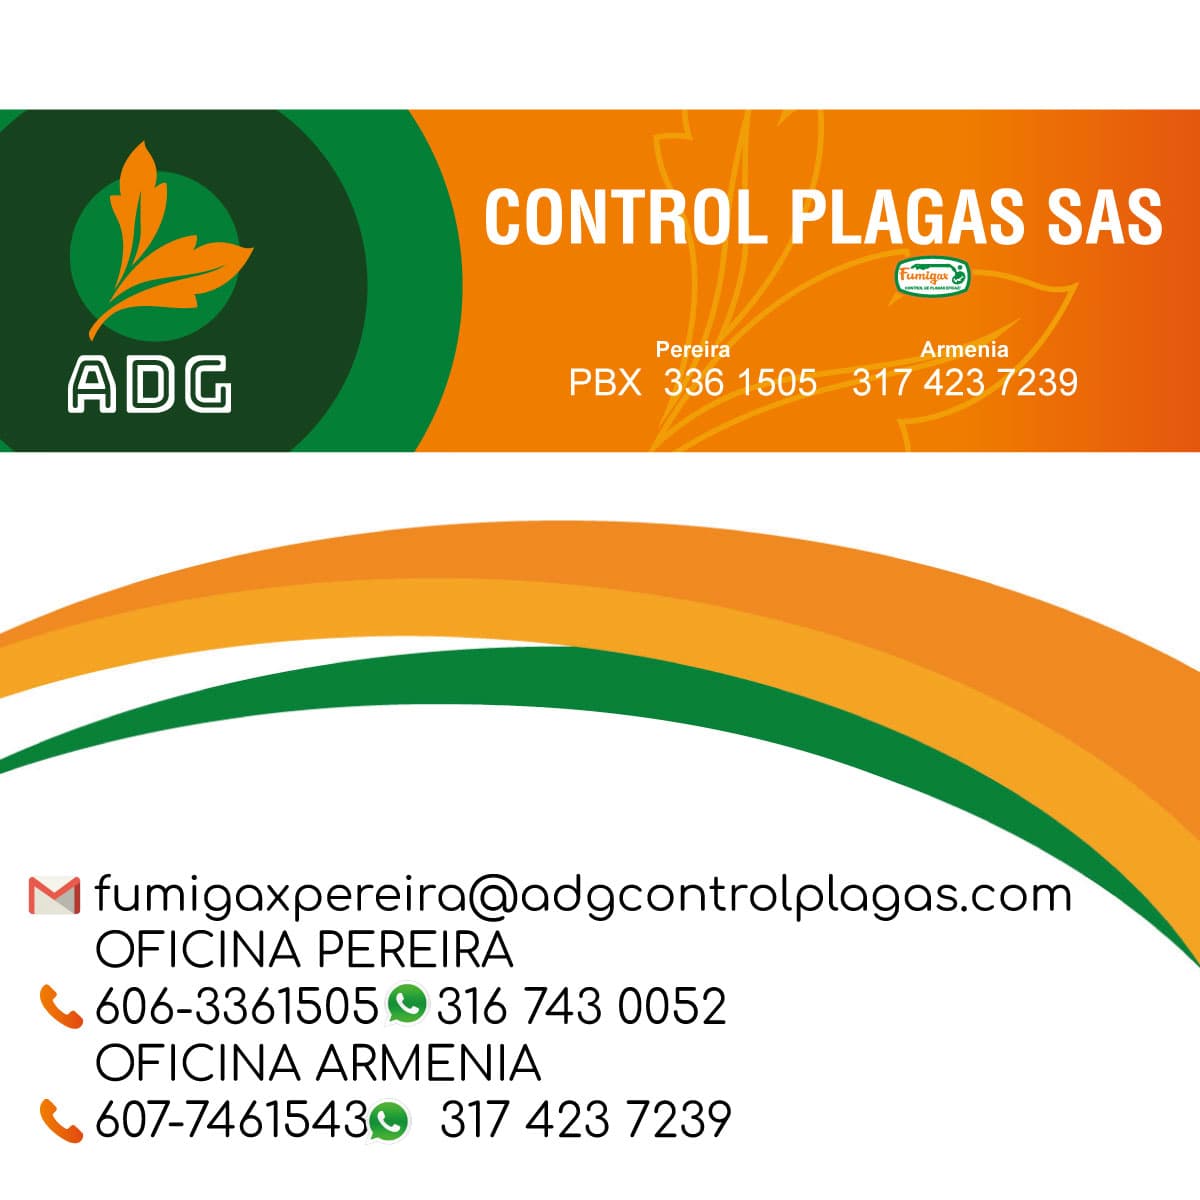 ADG Control Plagas S.A.S